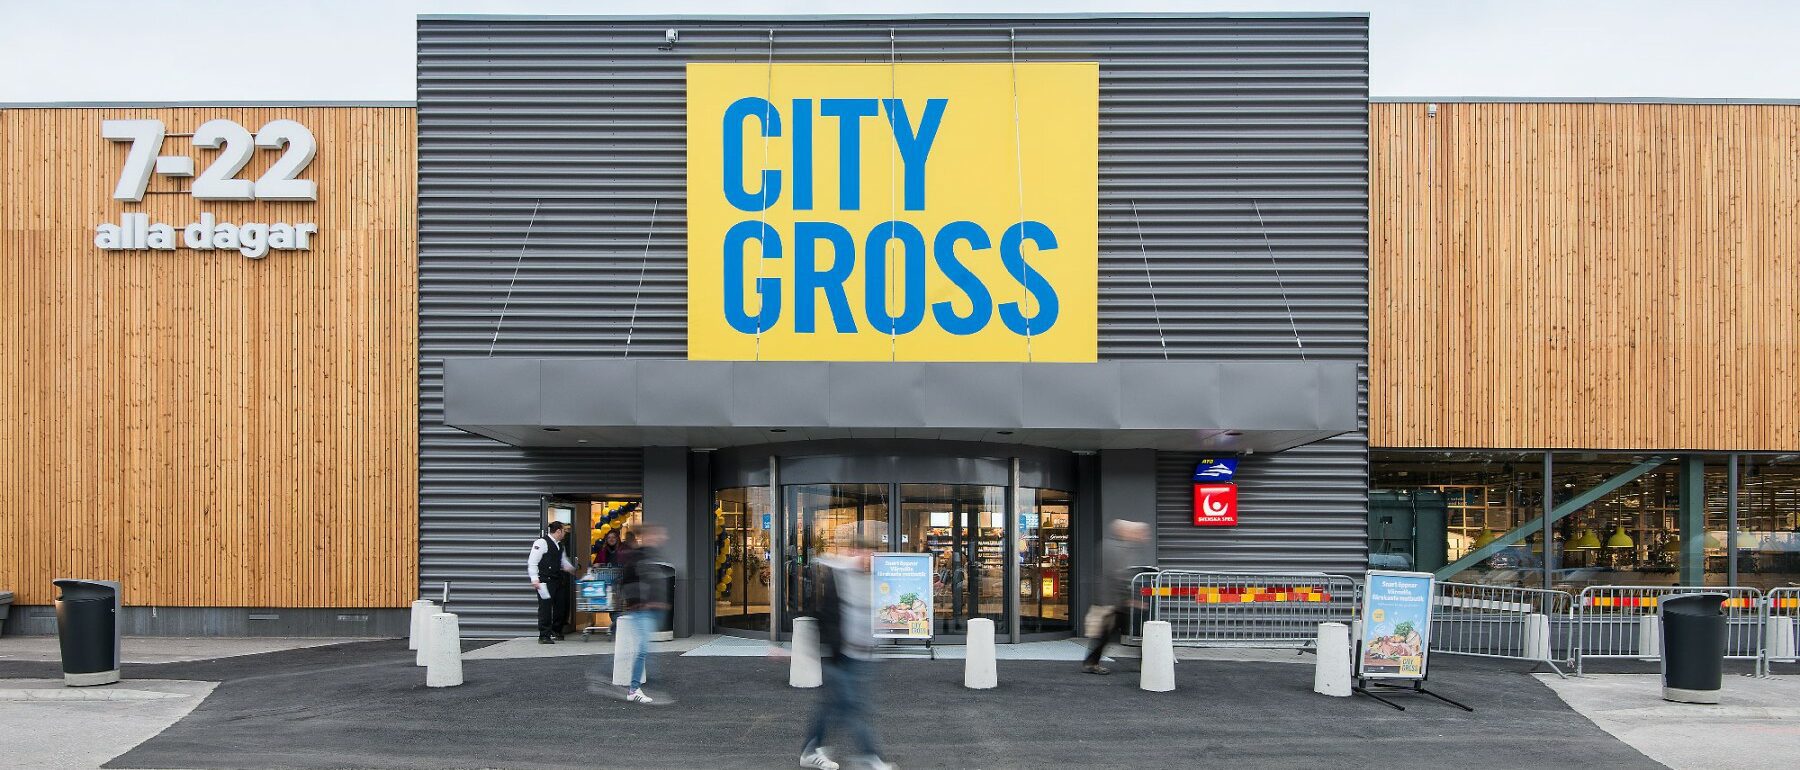 Photograph of CITY GROSS supermarkets